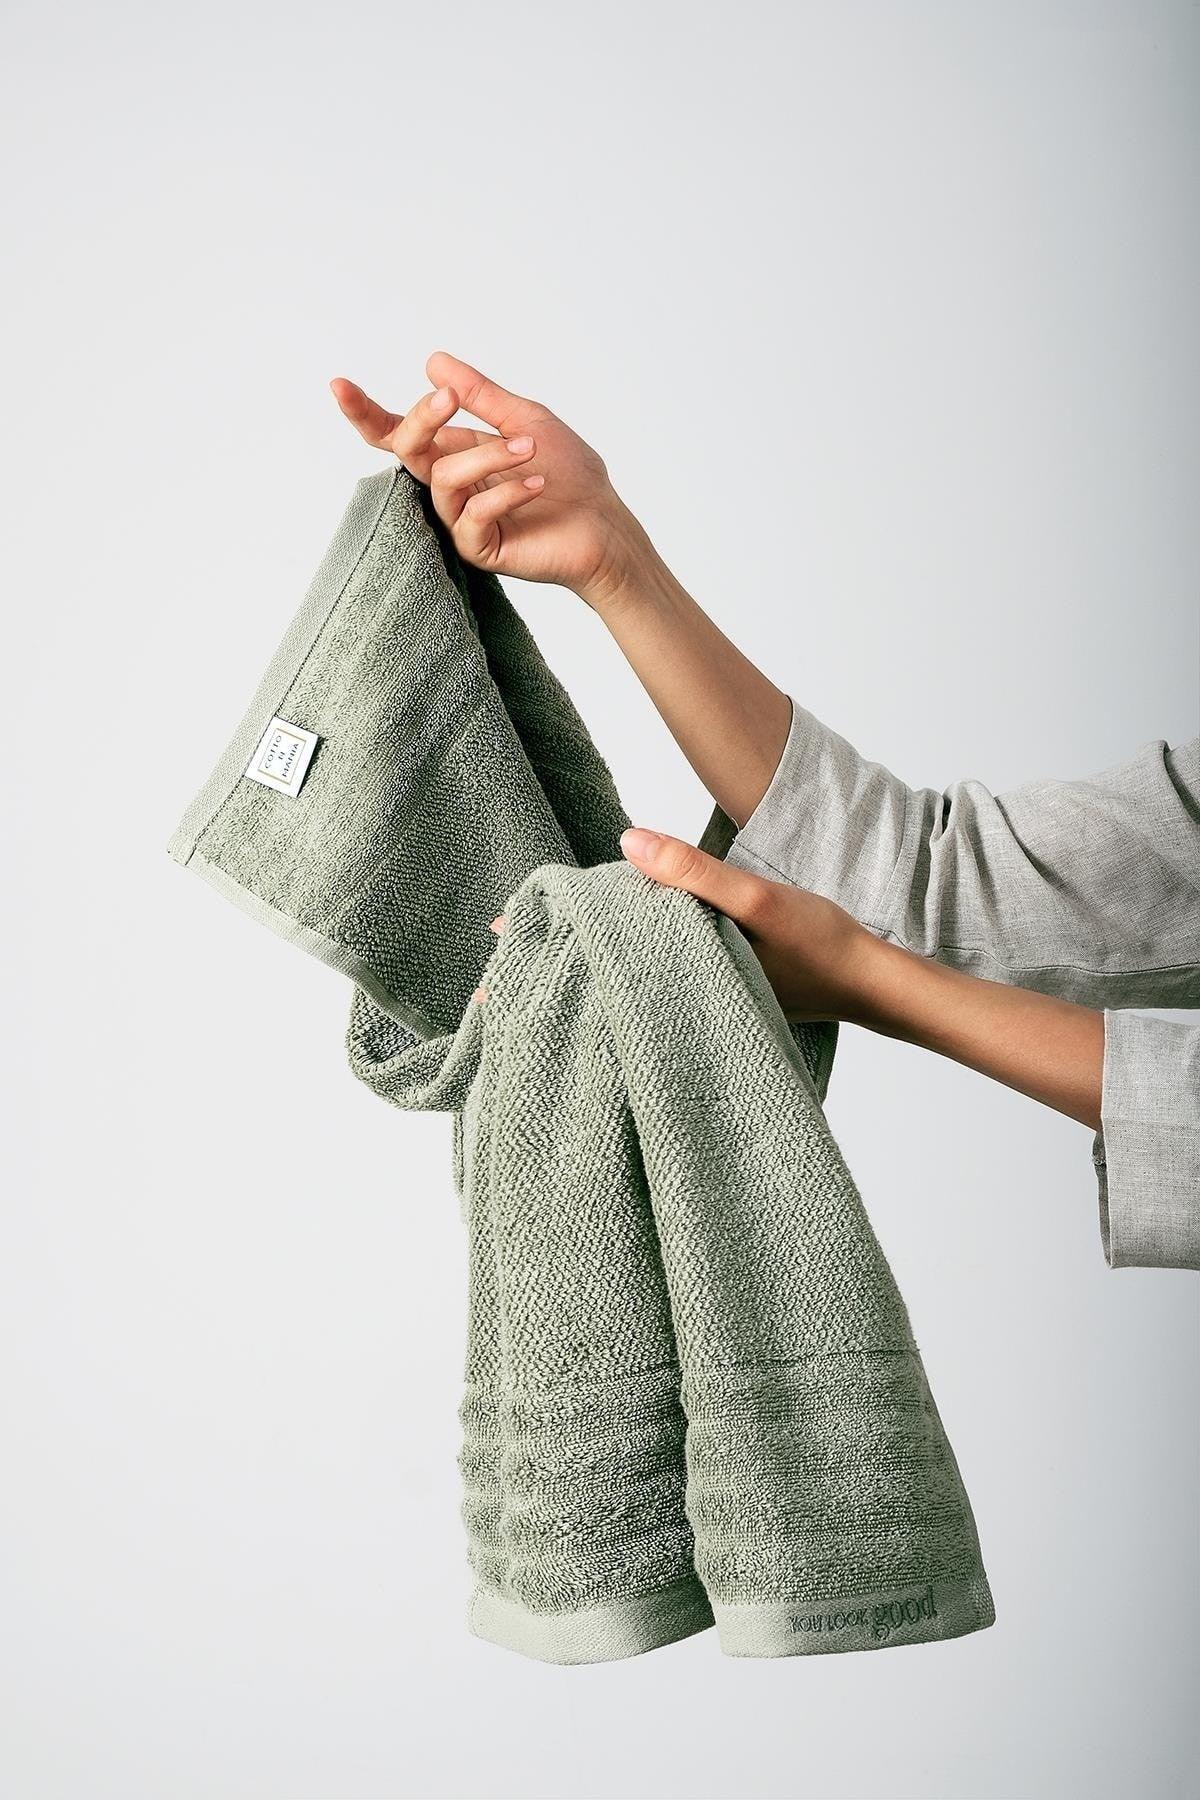 Lapis 303 - New Trend, 50x90cm. 2pcs. Premium Towel Set - Swordslife